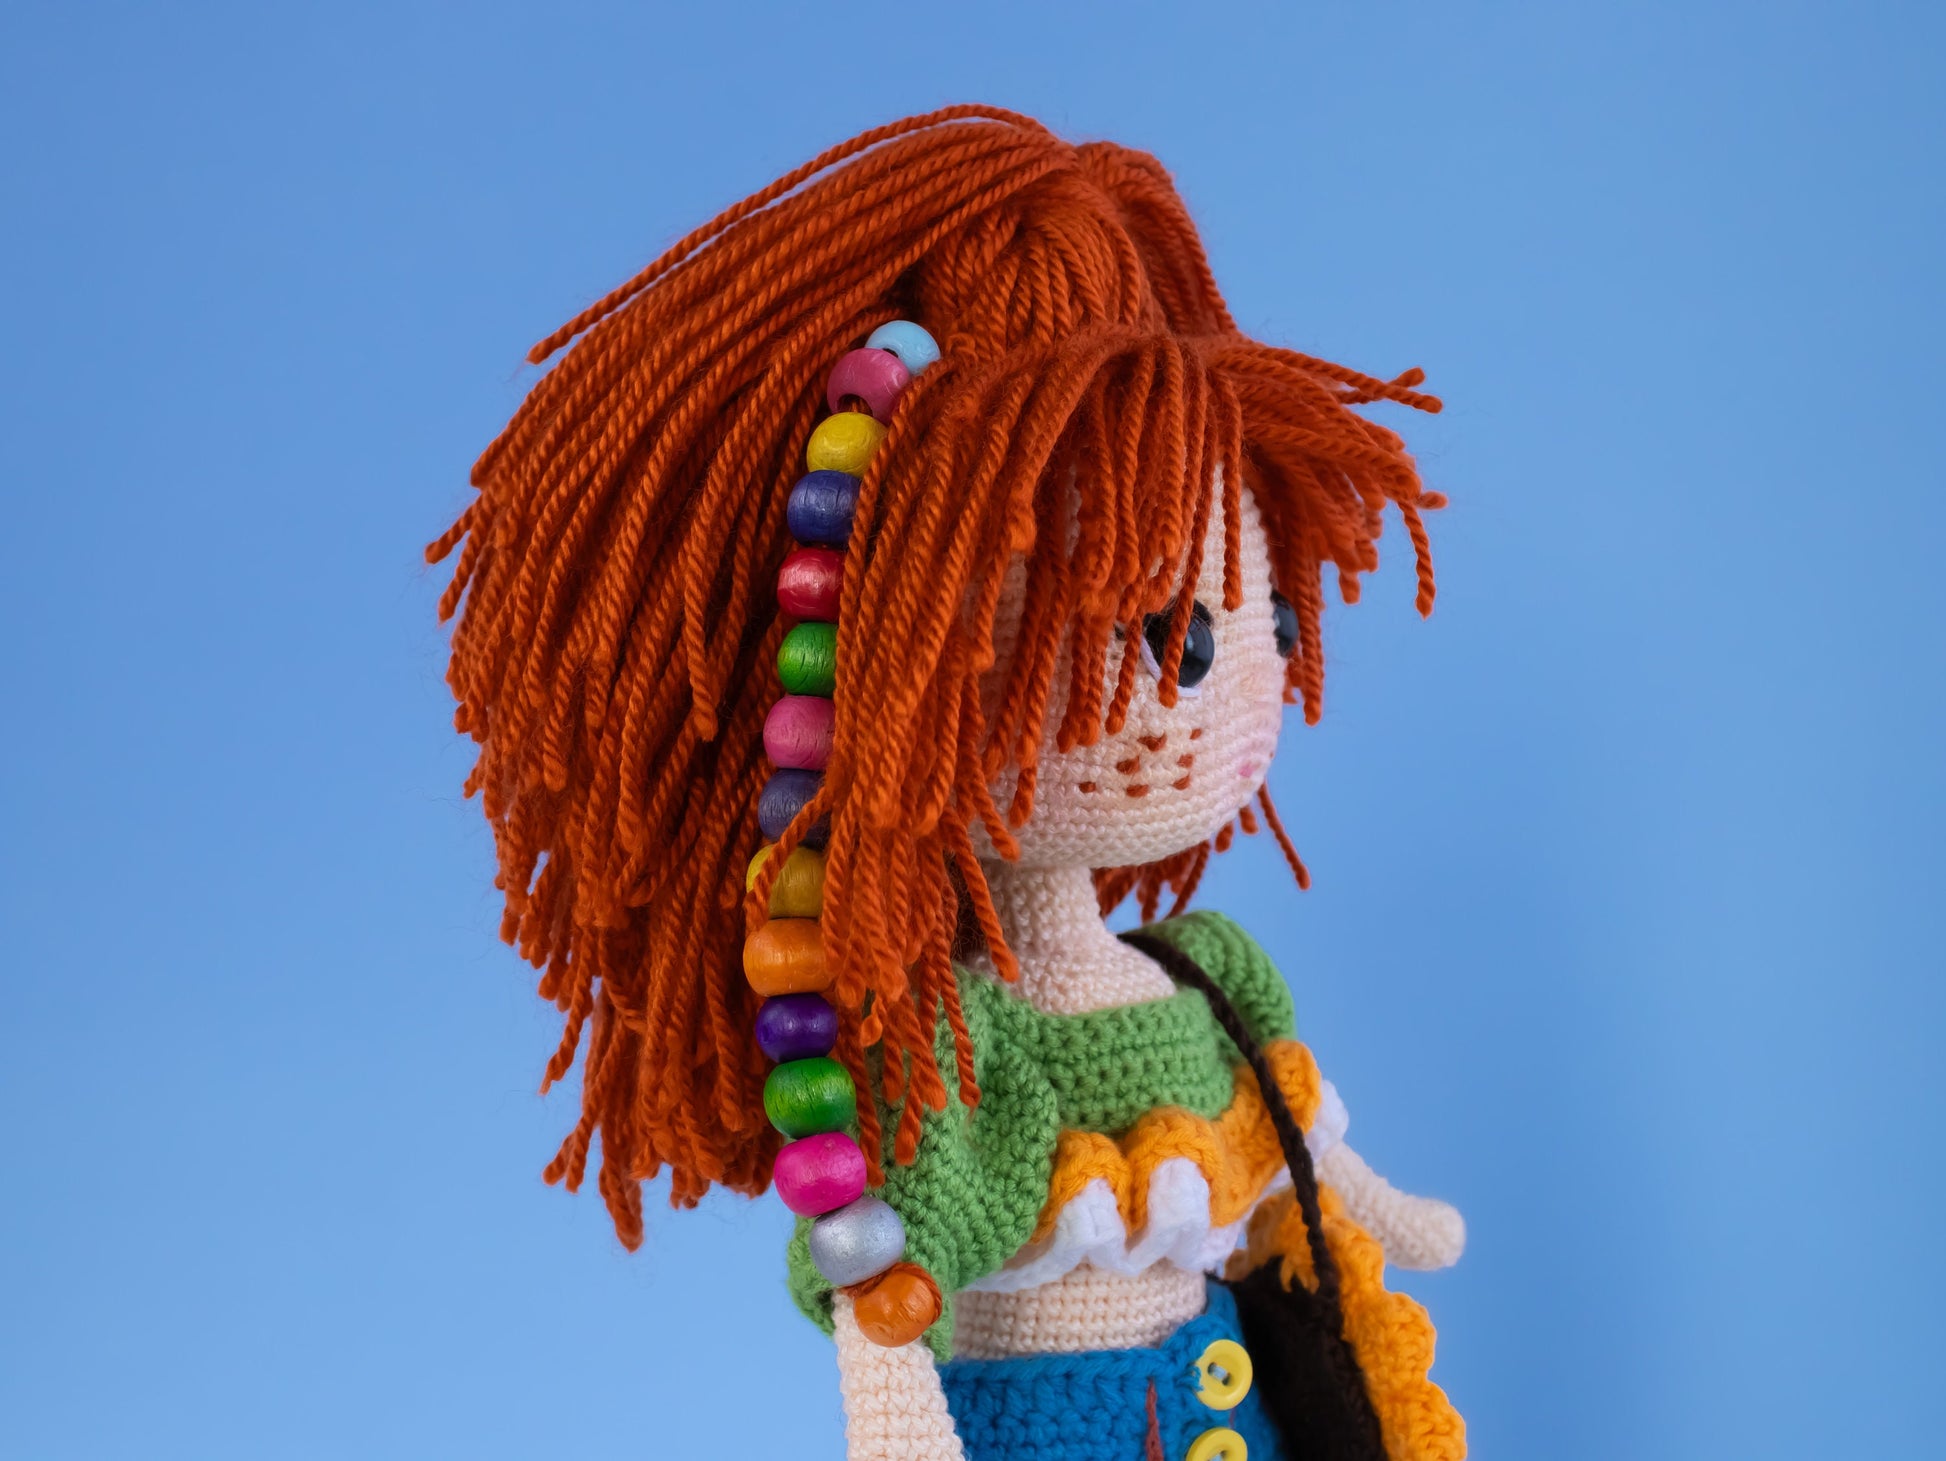 Crochet Doll, Crochet Amigurumi, Knitted Doll, Amigurumi Doll, Granddaughter Gift, Crocheted Dolls, Handmade Doll, Homemade Doll, Girl Gift